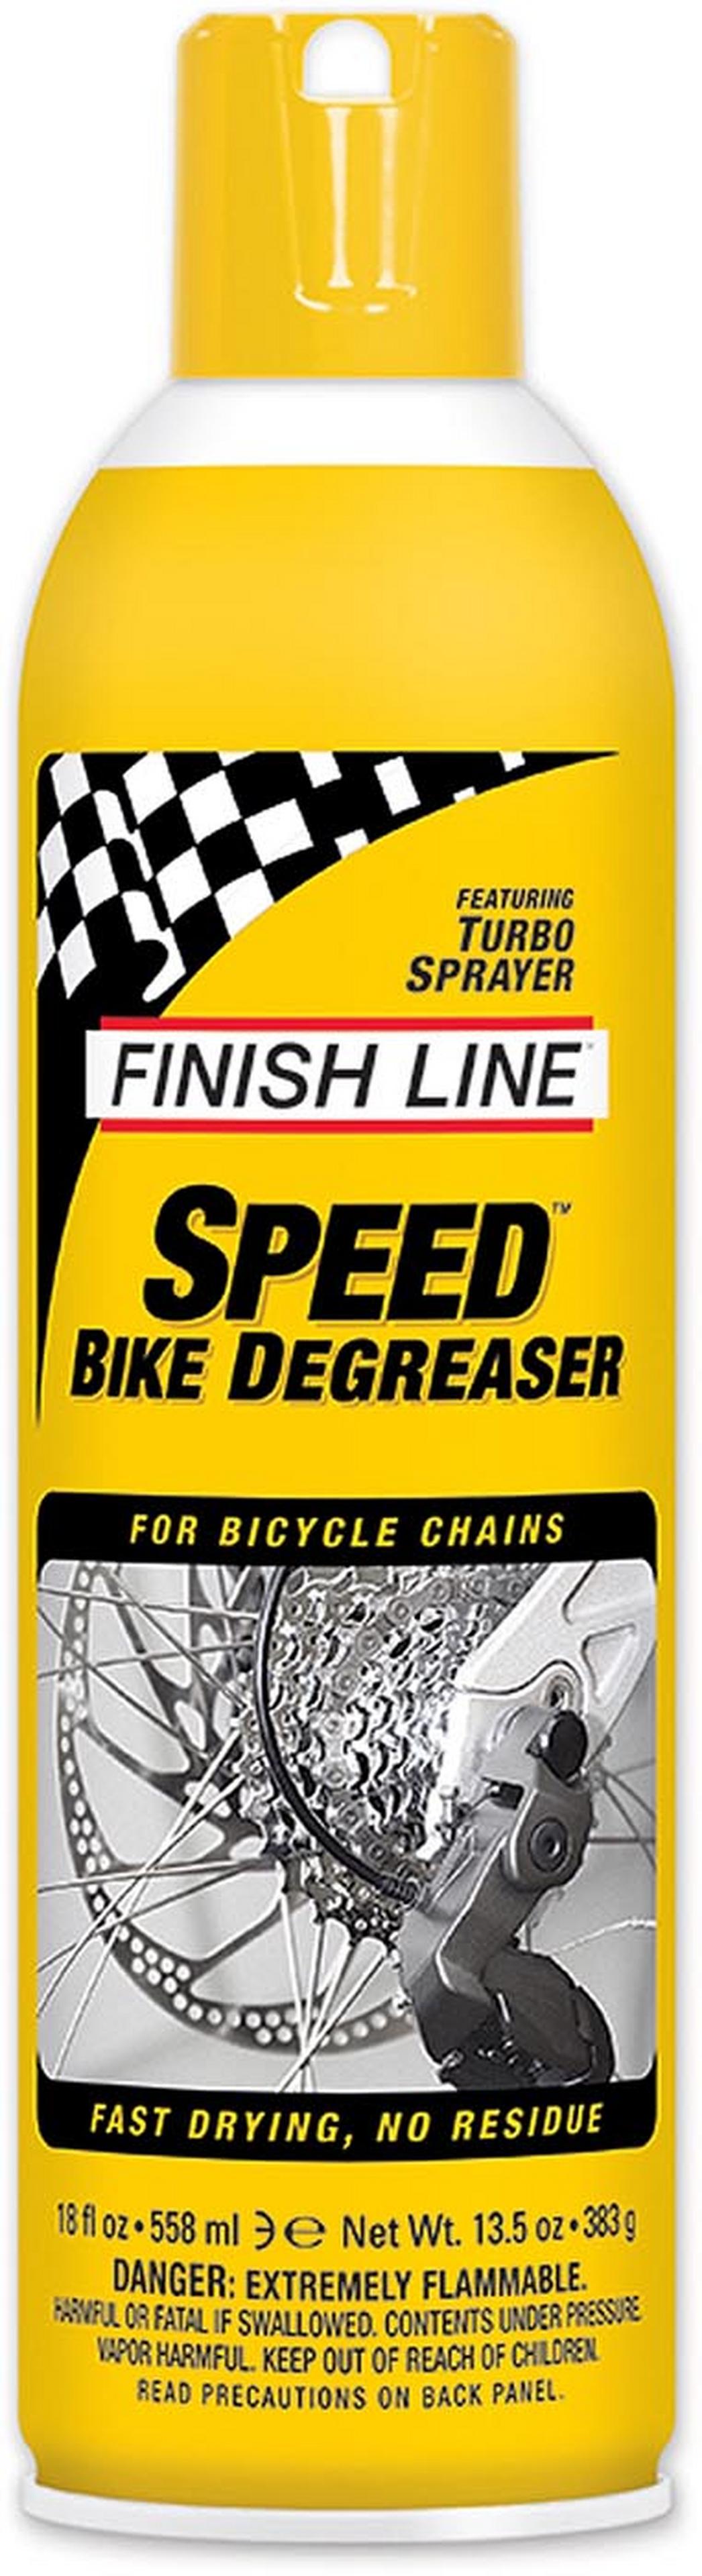 Bicycle Chain Cleaner Bike Degreaser Spray Portable Bike Chain